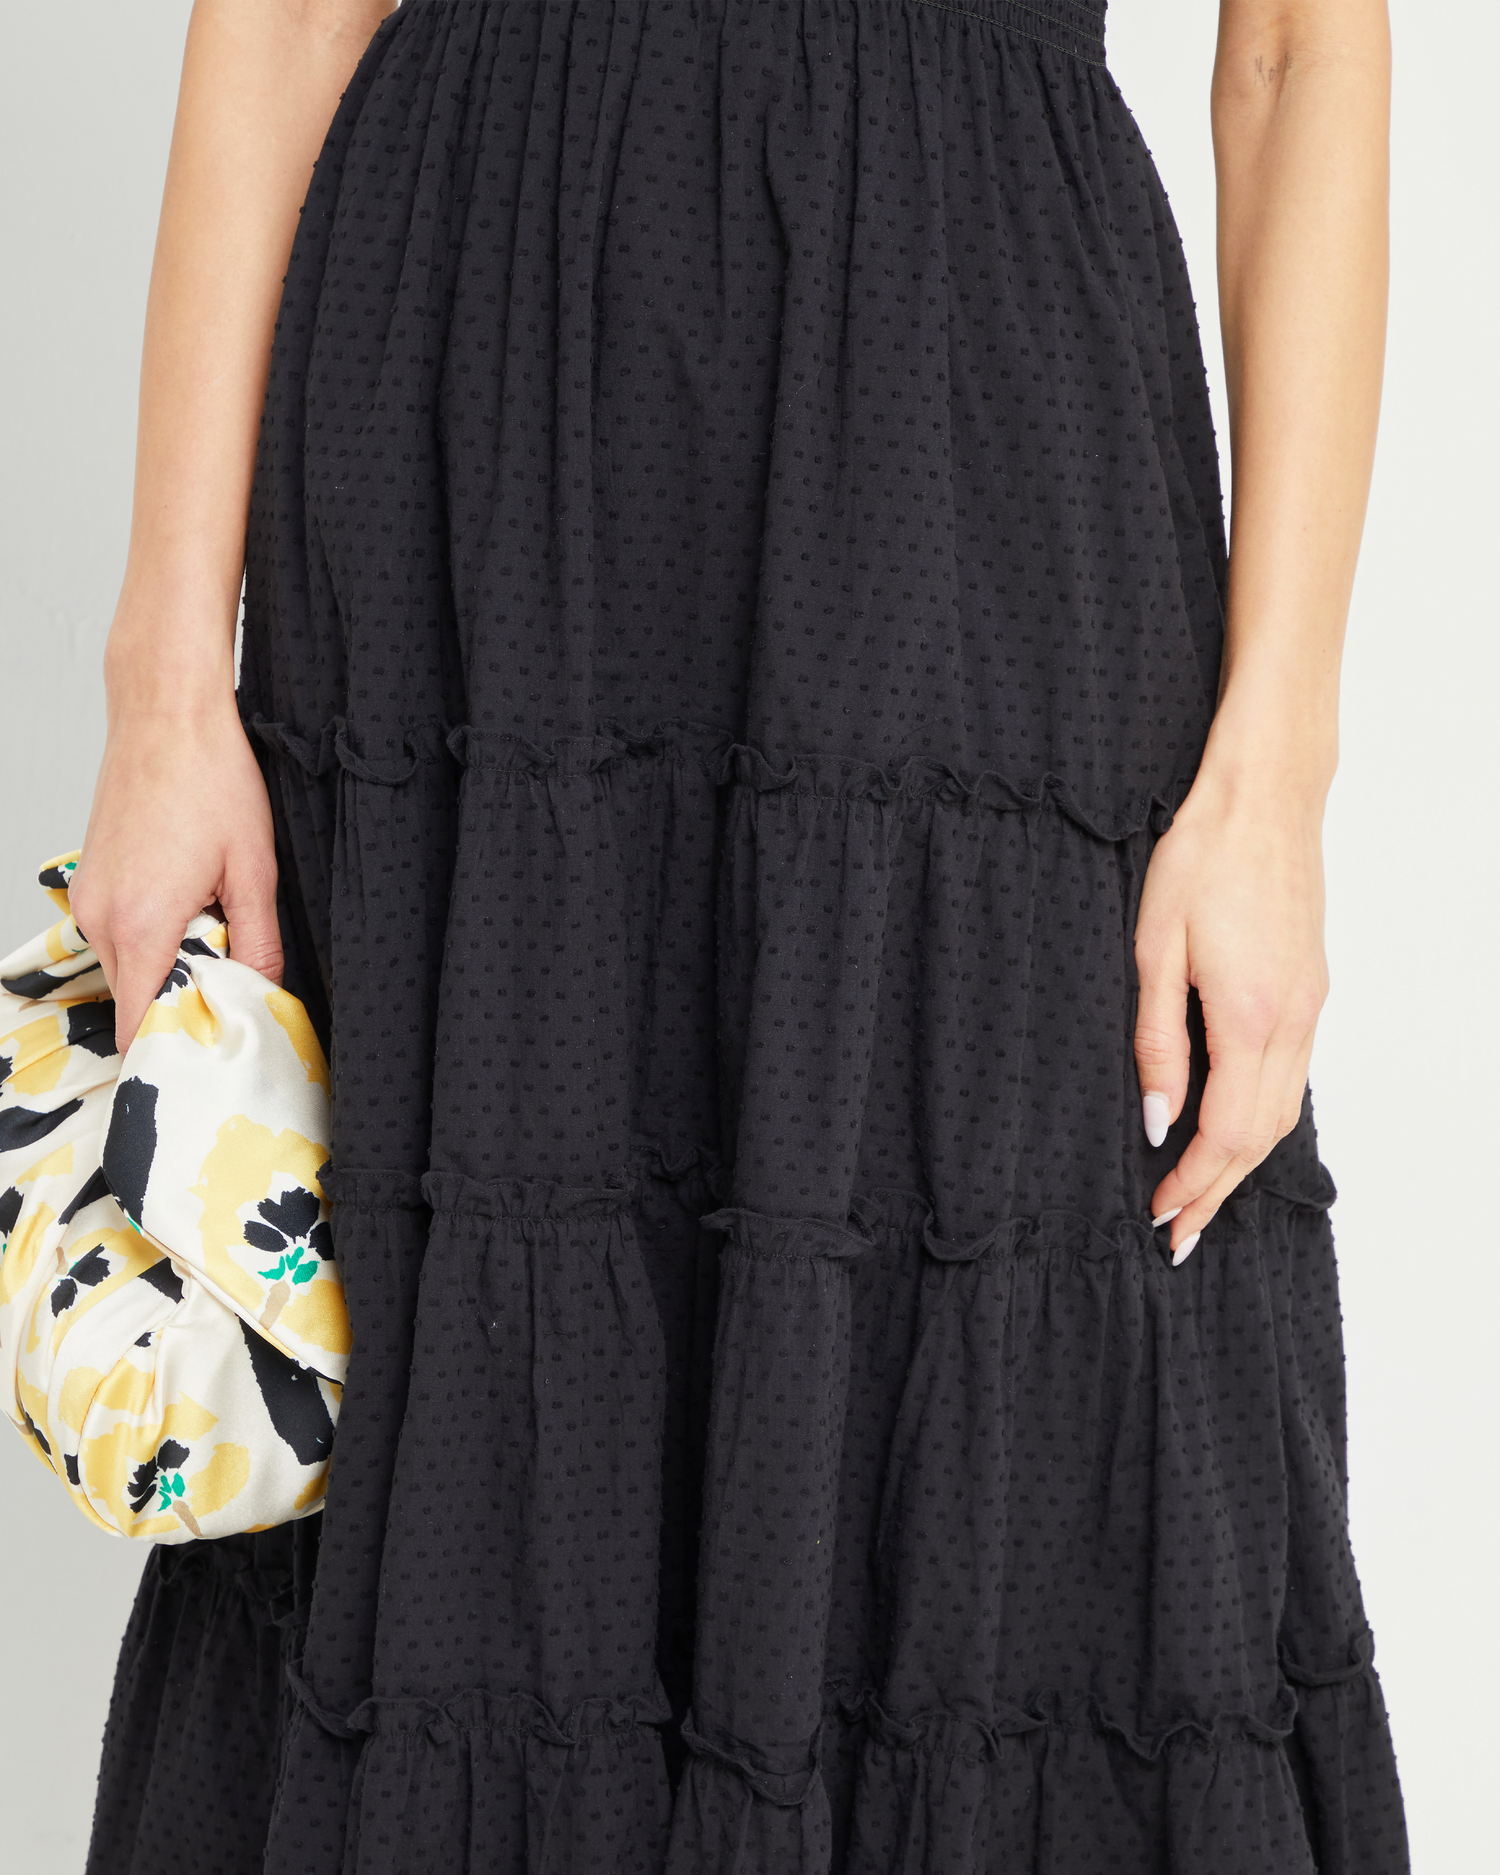 Sixth image of Calypso Maxi Dress, a black maxi dress, swiss dot material, smocked bodice, ruffles cap sleeves 